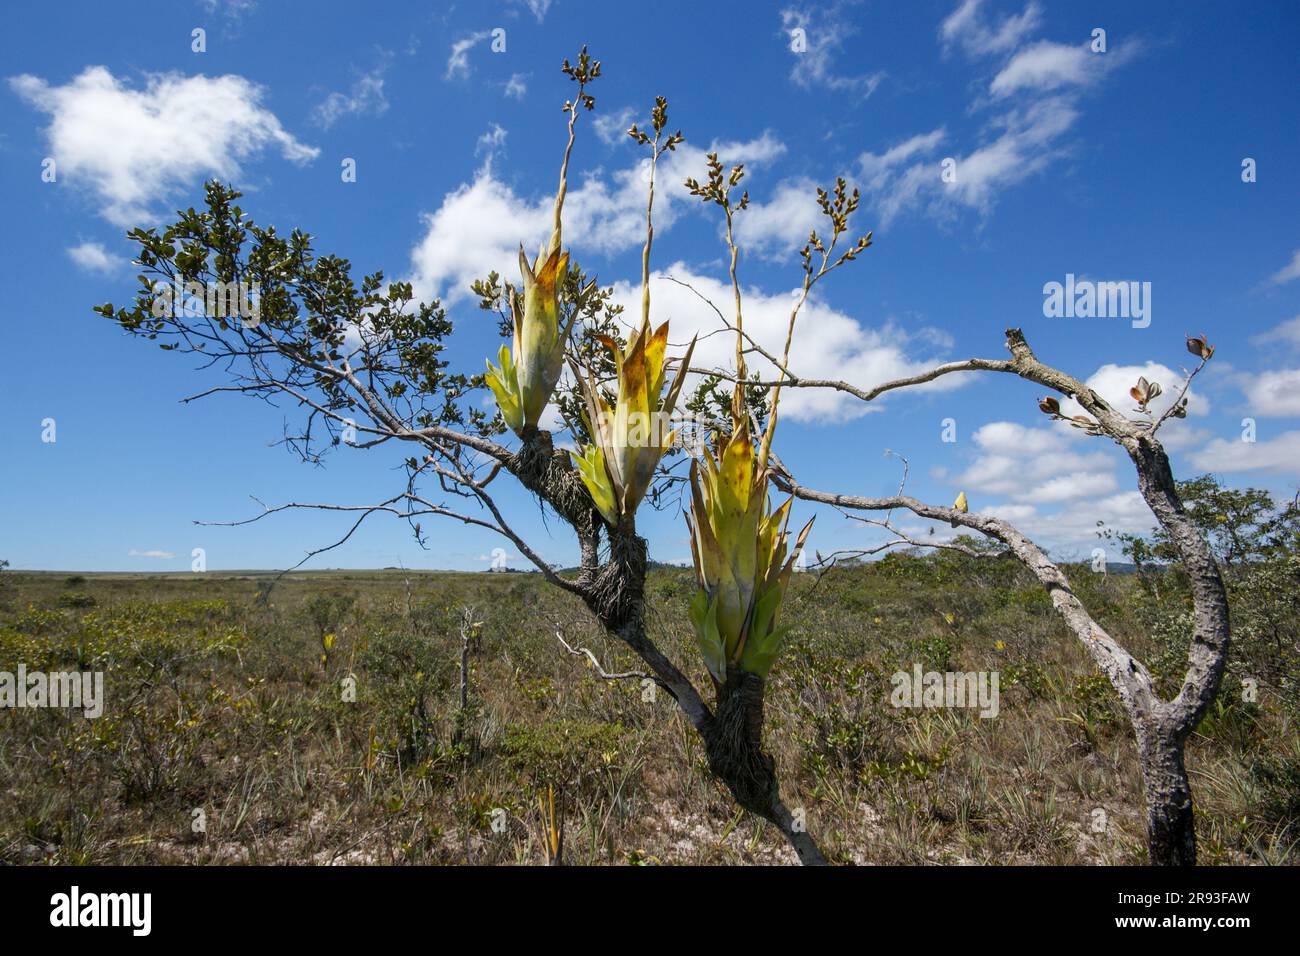 Epiphytic bromeliad Catopsis berteroniana plants in flower on a tree, Gran Sabana, Venezuela Stock Photo